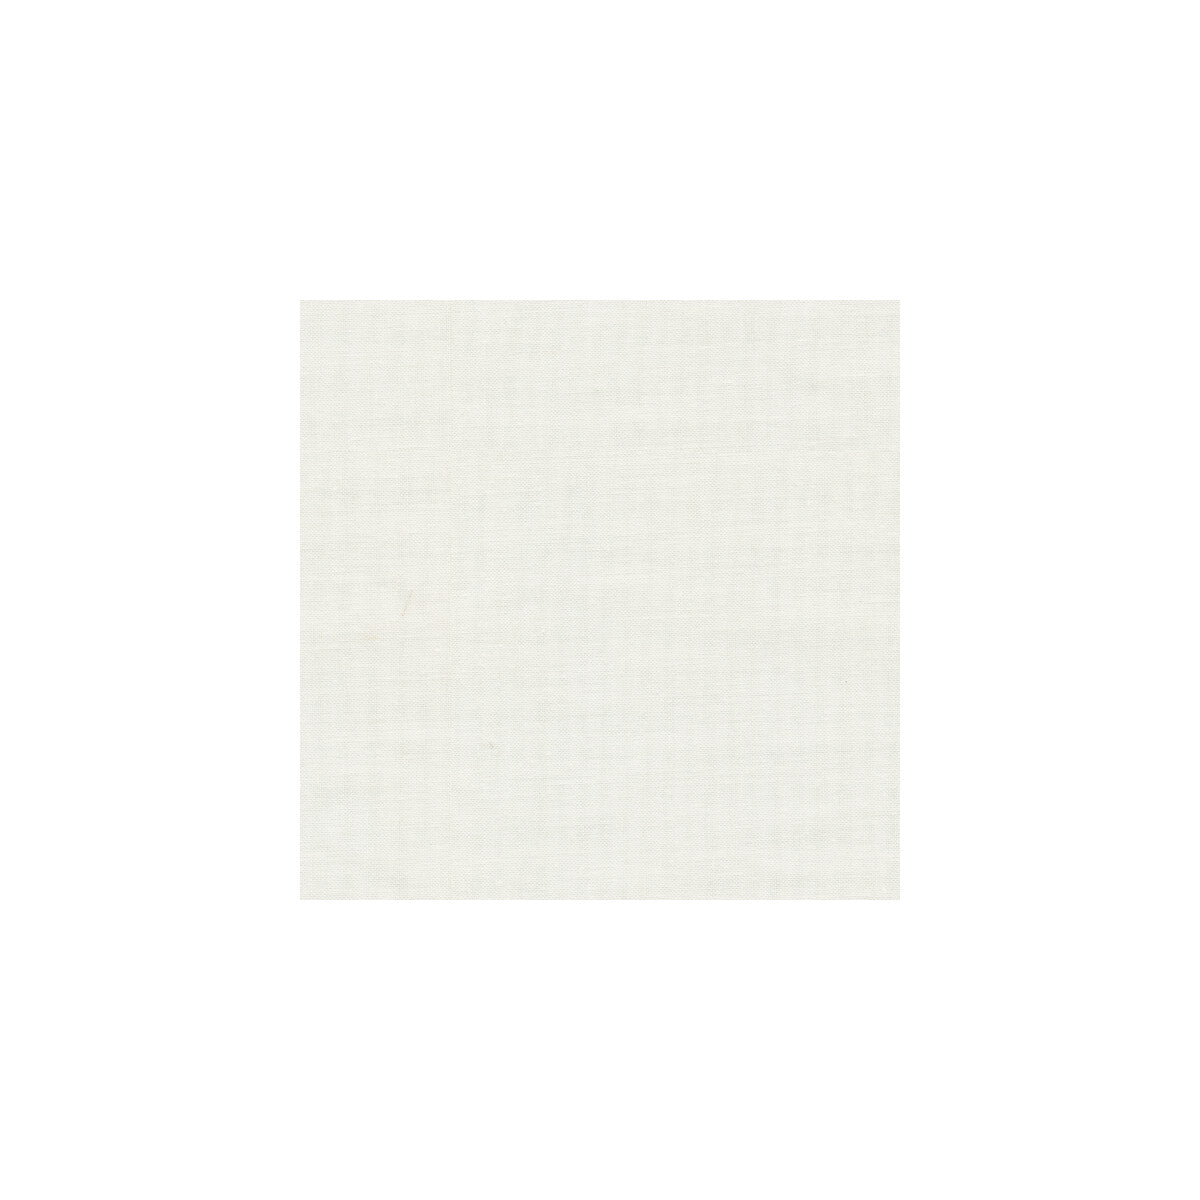 Kravet Basic fabric in 9800-101 color - pattern 9800.101.0 - by Kravet Basics in the Gis collection